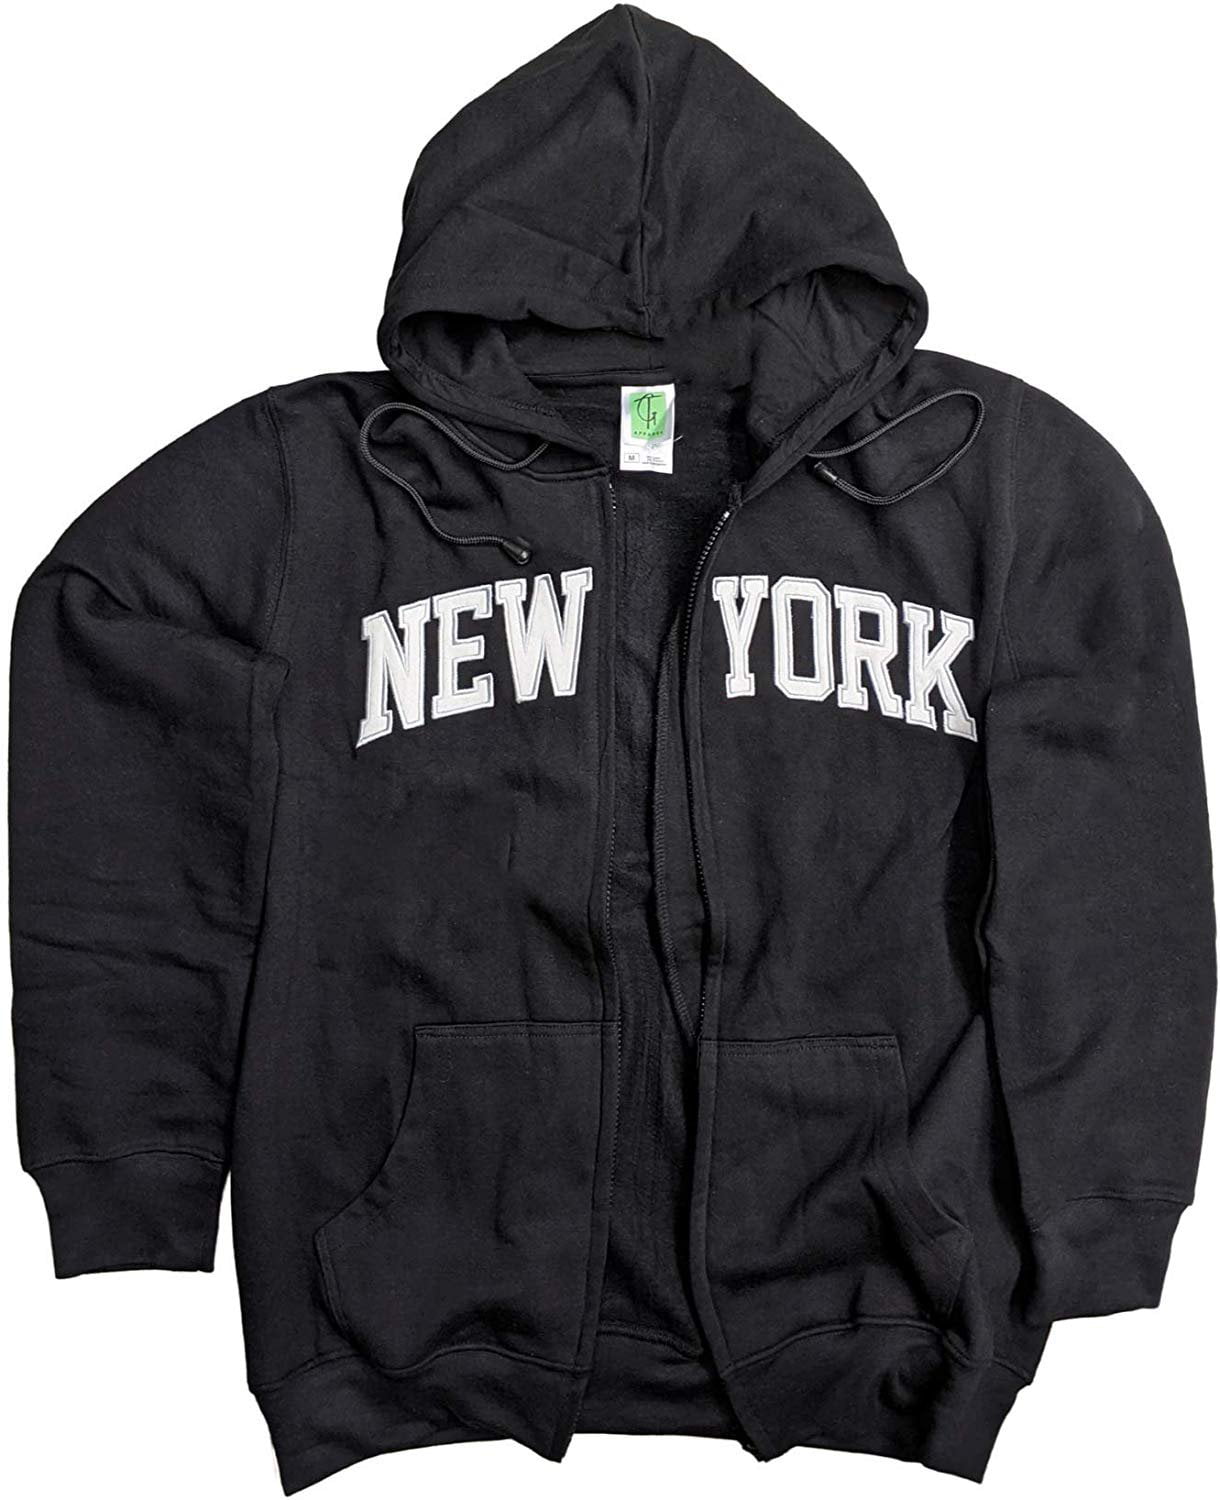 Time Lag New York sweatshirt New York pullover Time Lag sweater shirt jacket hoodies windbreaker big logo  LARGE Size Rare!